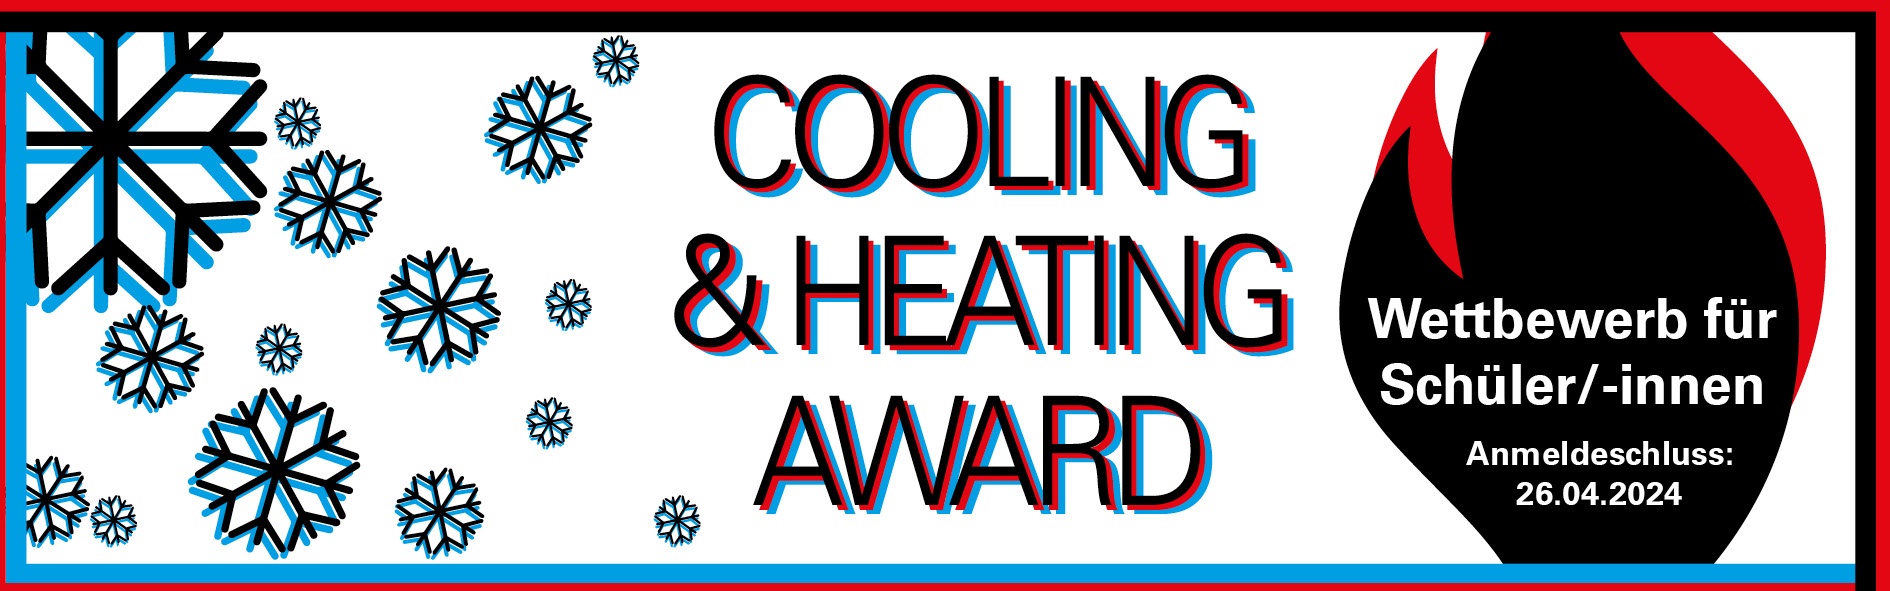 Cooling & Heating Award 2024